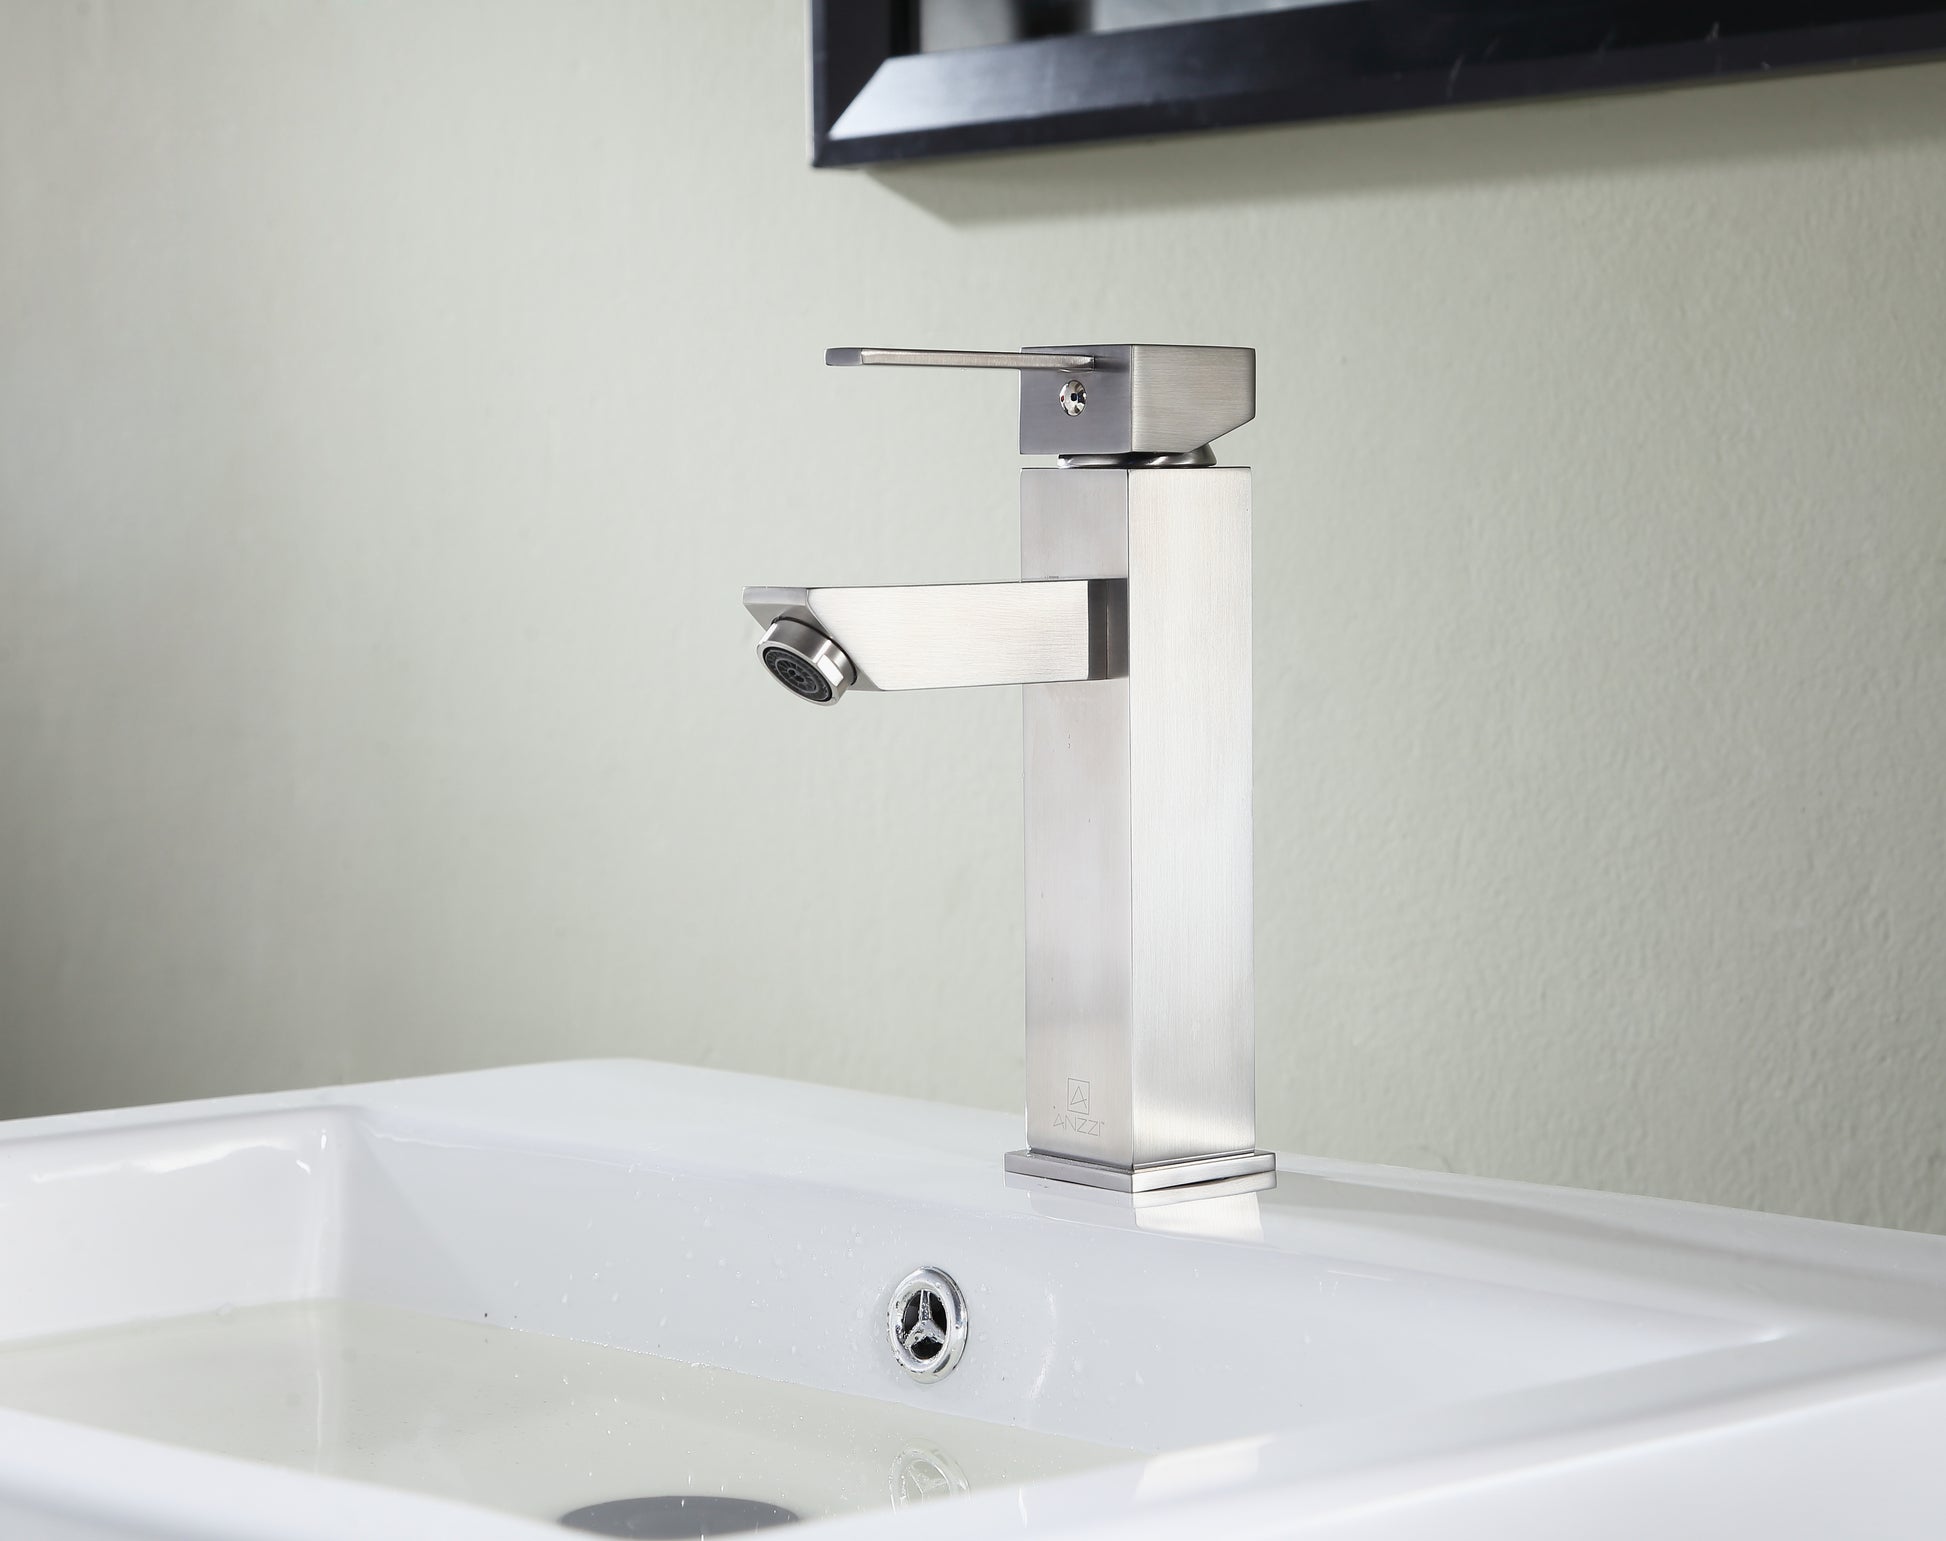 L-AZ112BN - Pygmy Single Hole Single Handle Bathroom Faucet in Brushed Nickel